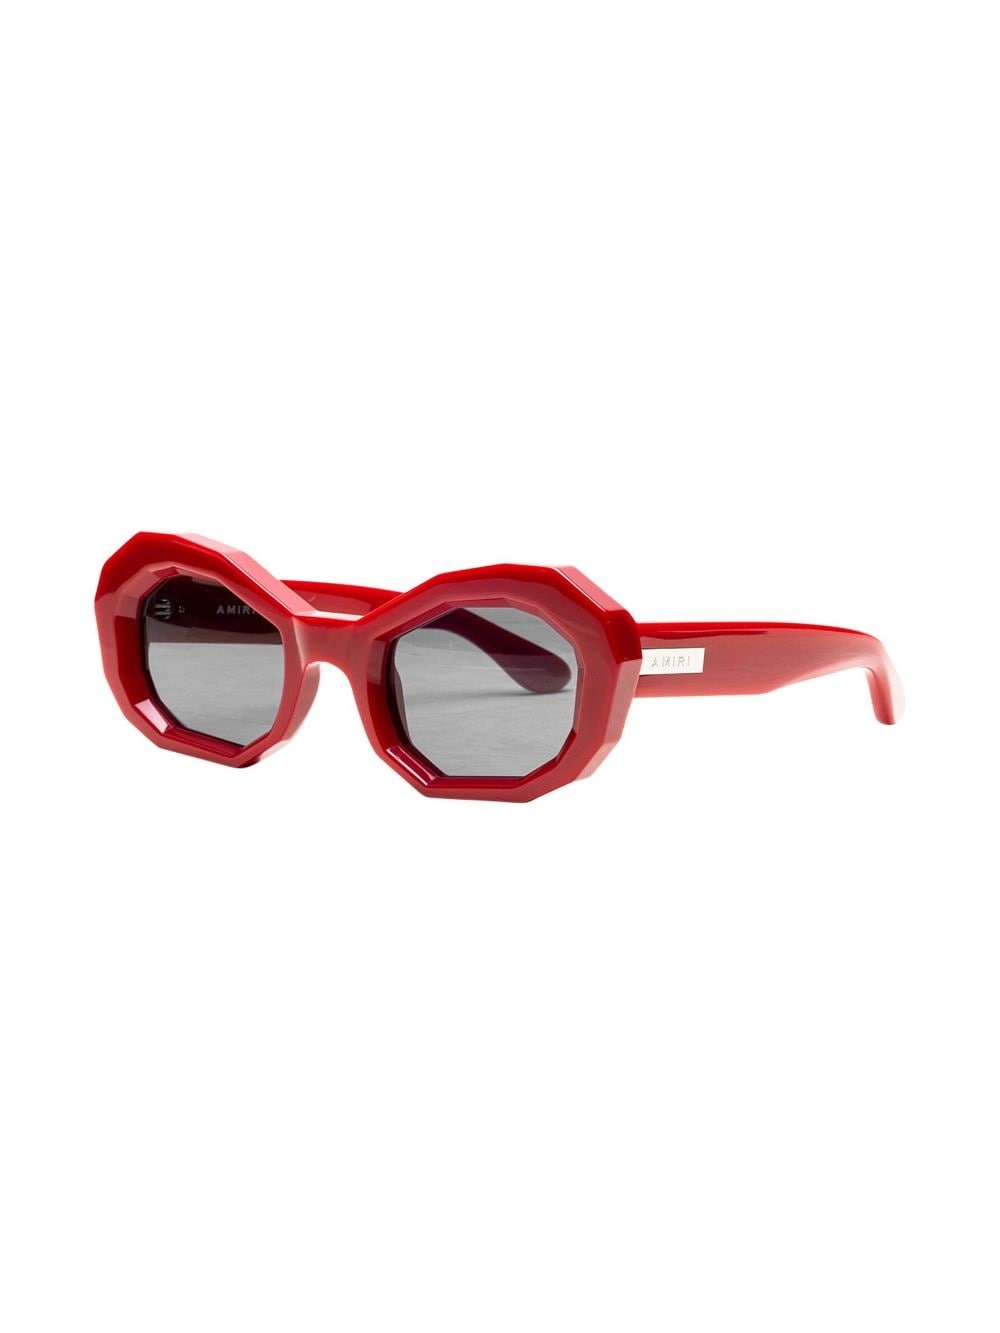 Honeycomb "Red" sunglasses - 2